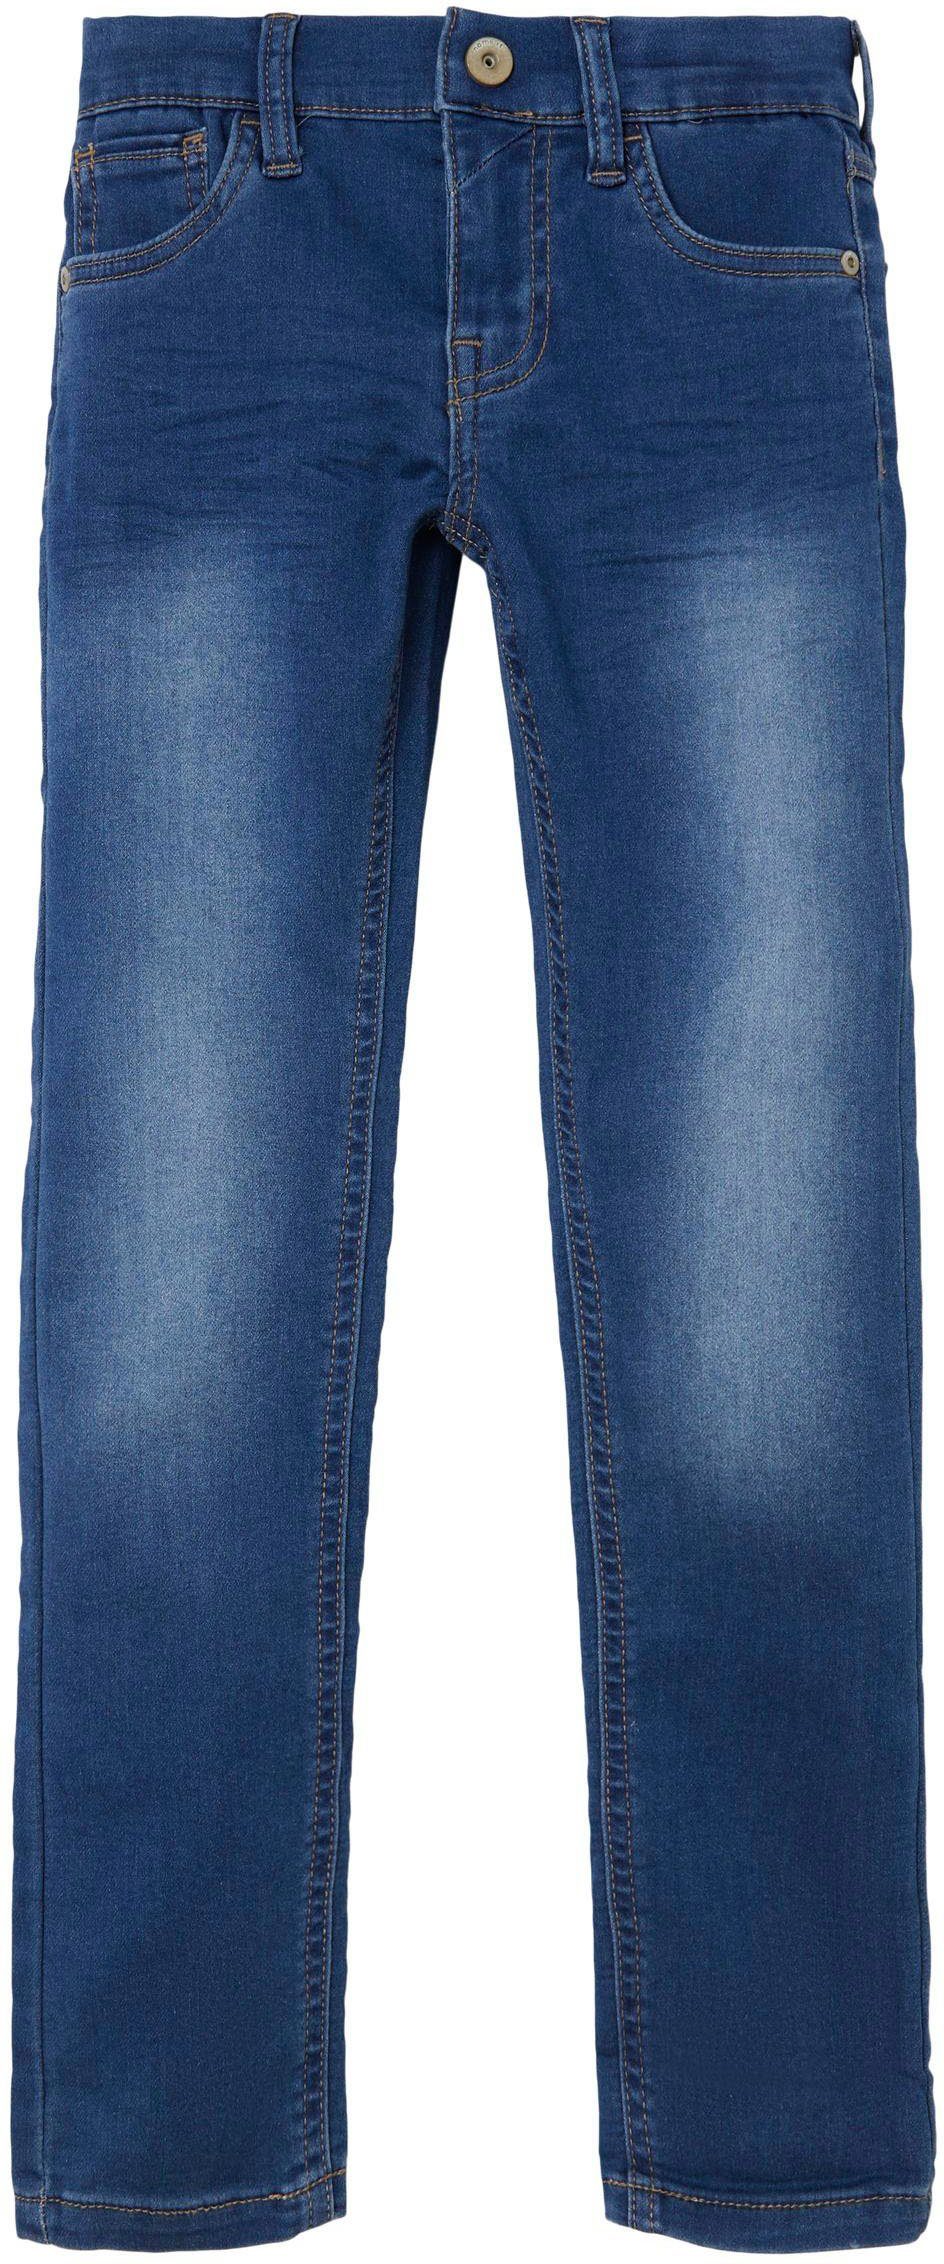 Stretch-Jeans NKMTHEO Name blue COR1 SWE medium DNMTHAYER It PANT denim